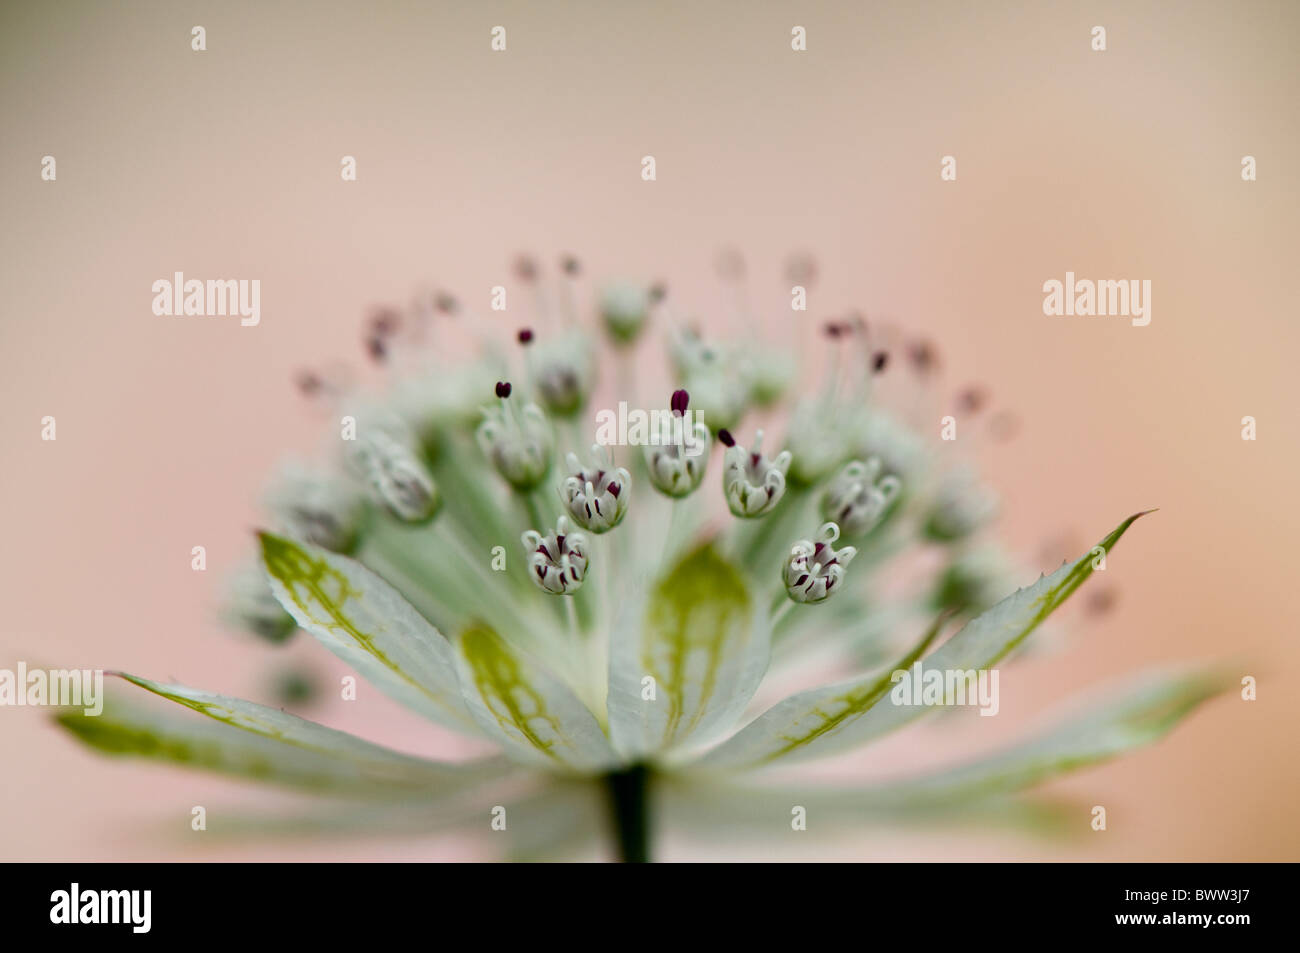 A single flower head of Astrantia major 'Large white' - Masterwort Stock Photo